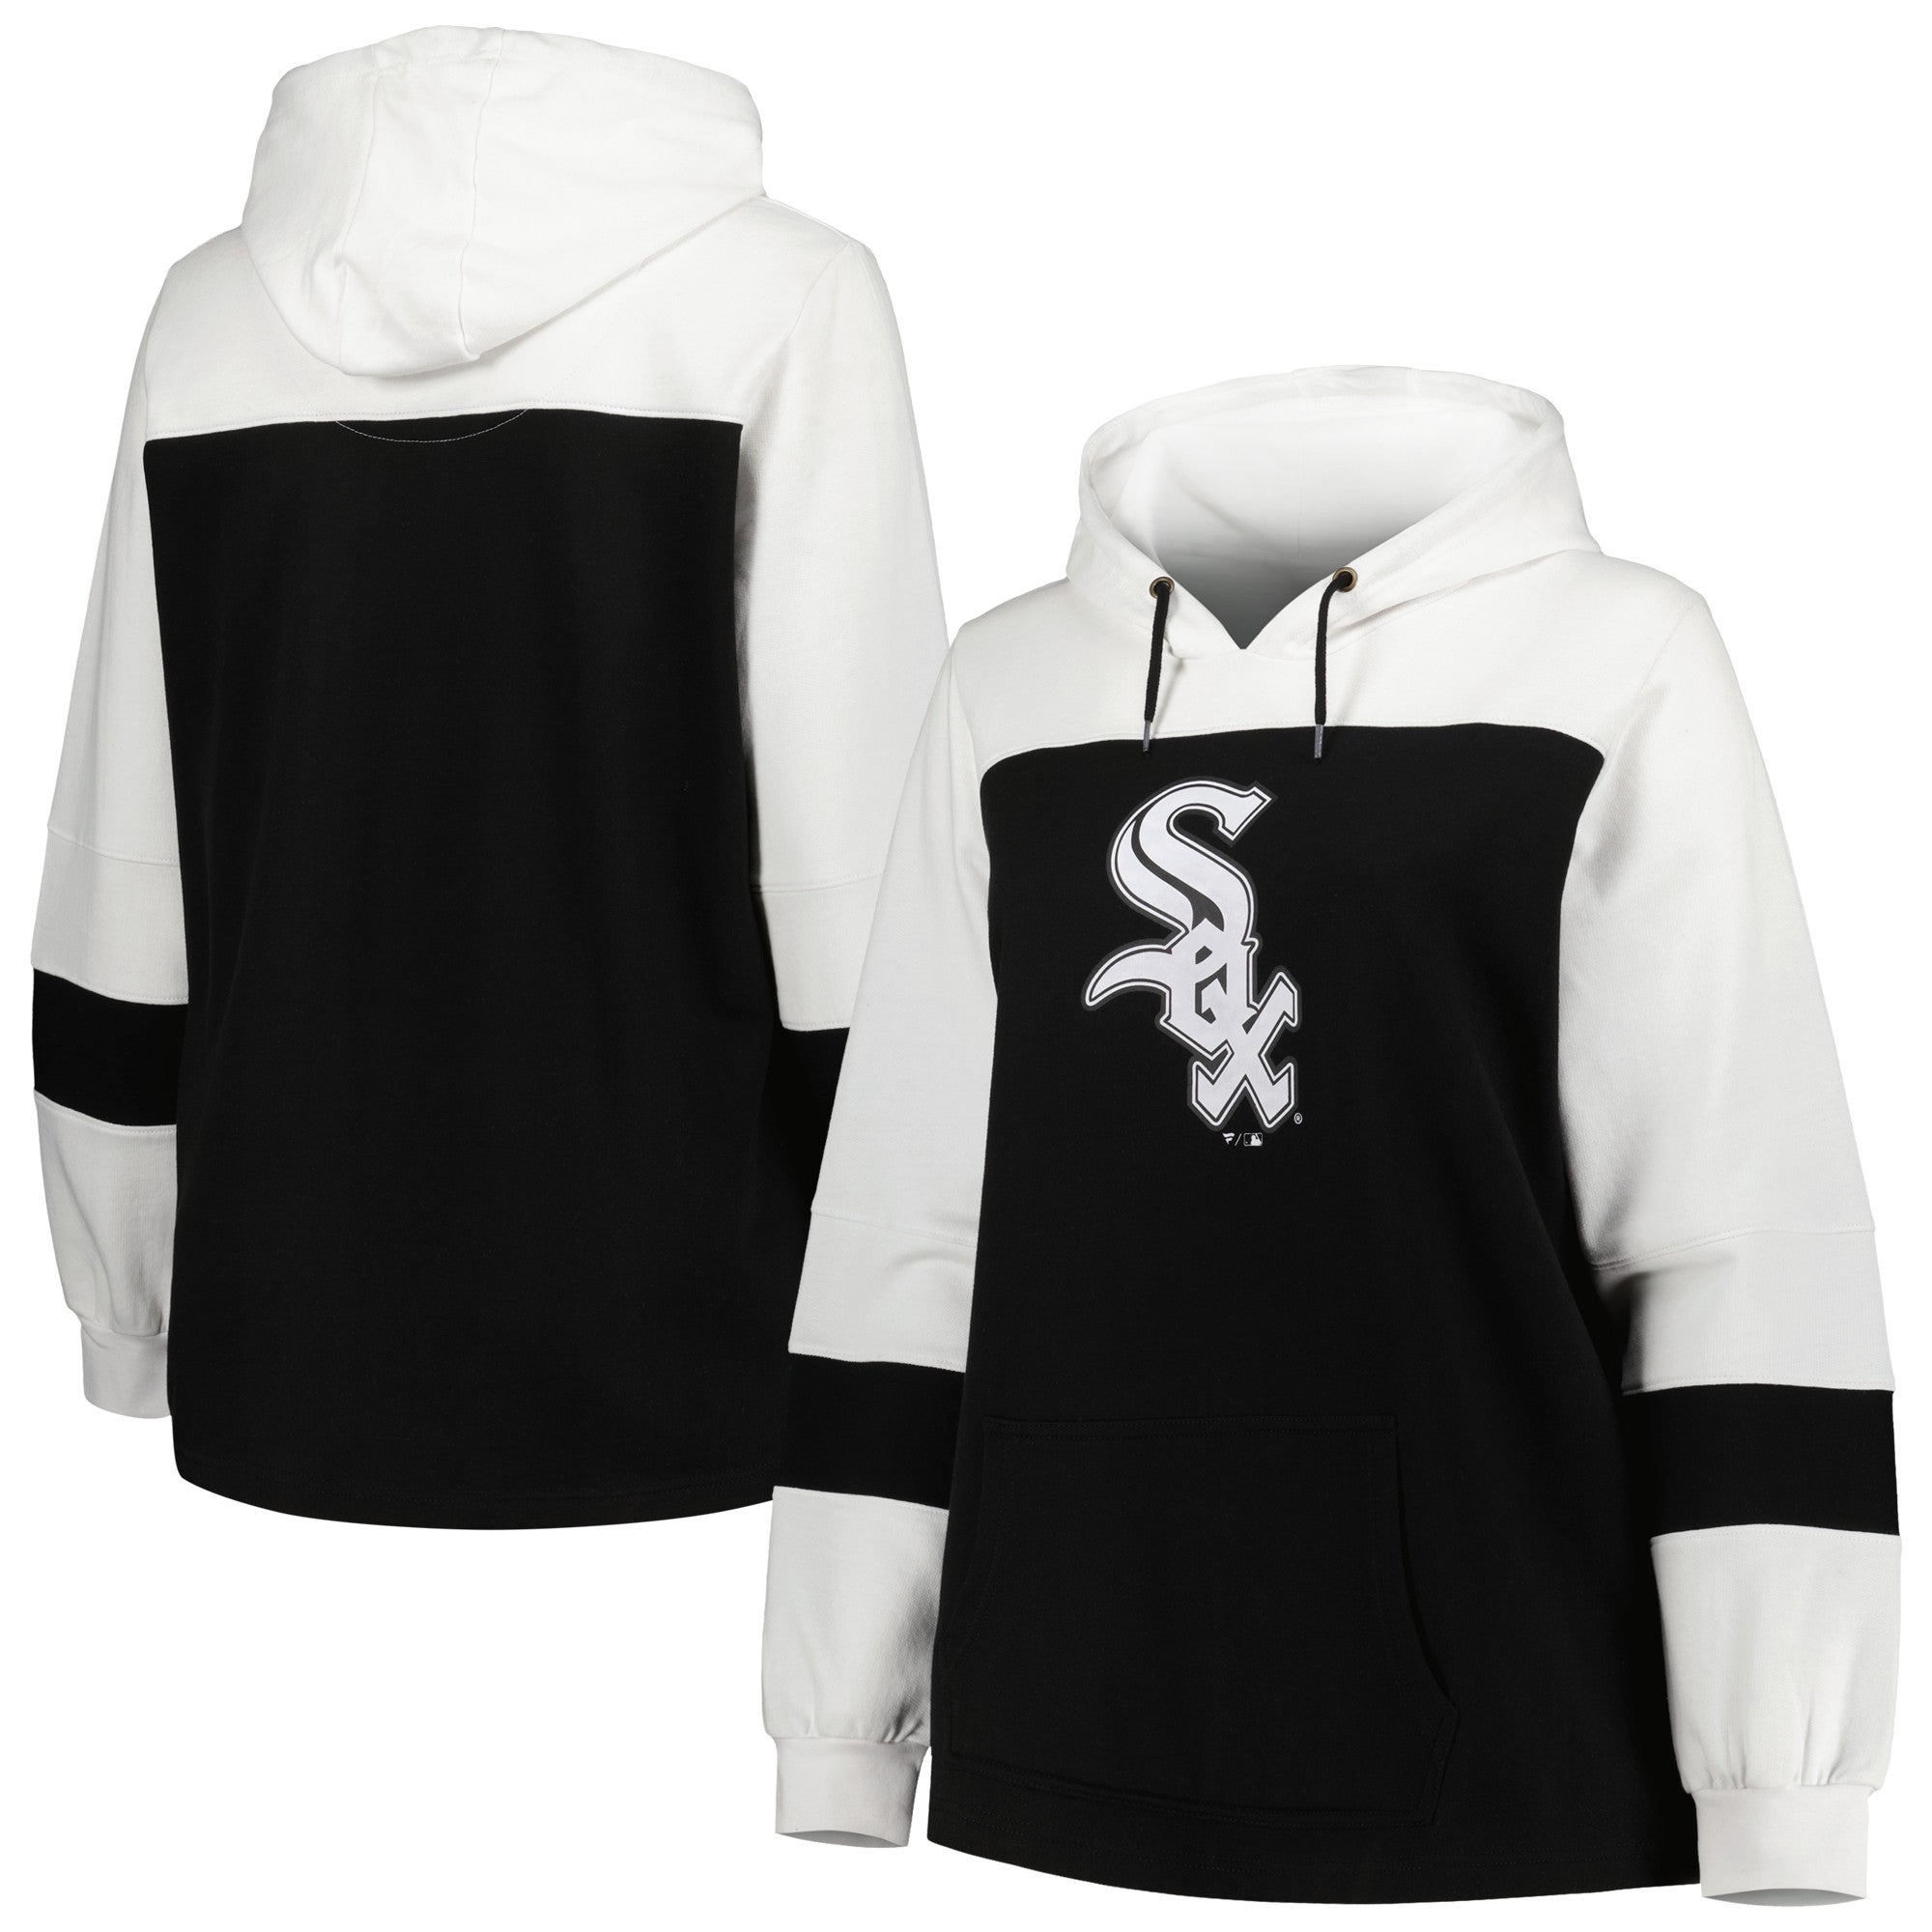 Profile Women's White/Black Chicago White Sox Plus Size Colorblock T-Shirt